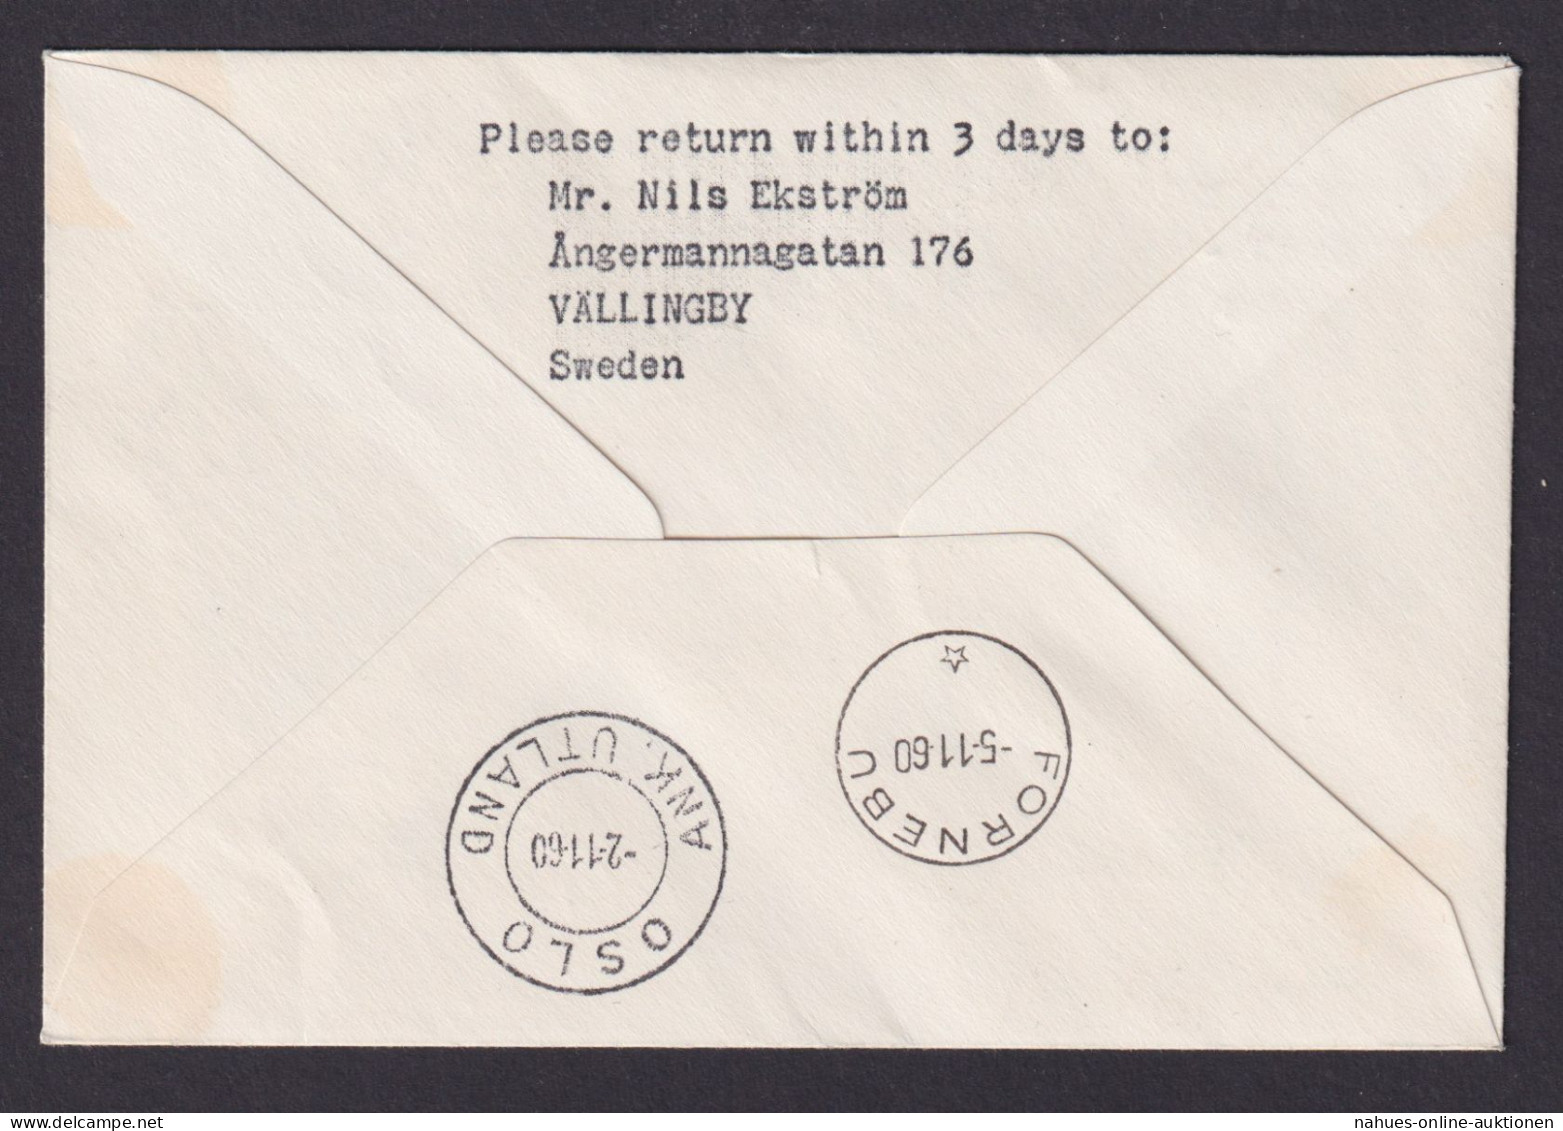 Finnland Flugpost Brief Air Mail Finnair Erstflug Helsinki Oslo Fornebu Norwegen - Aland